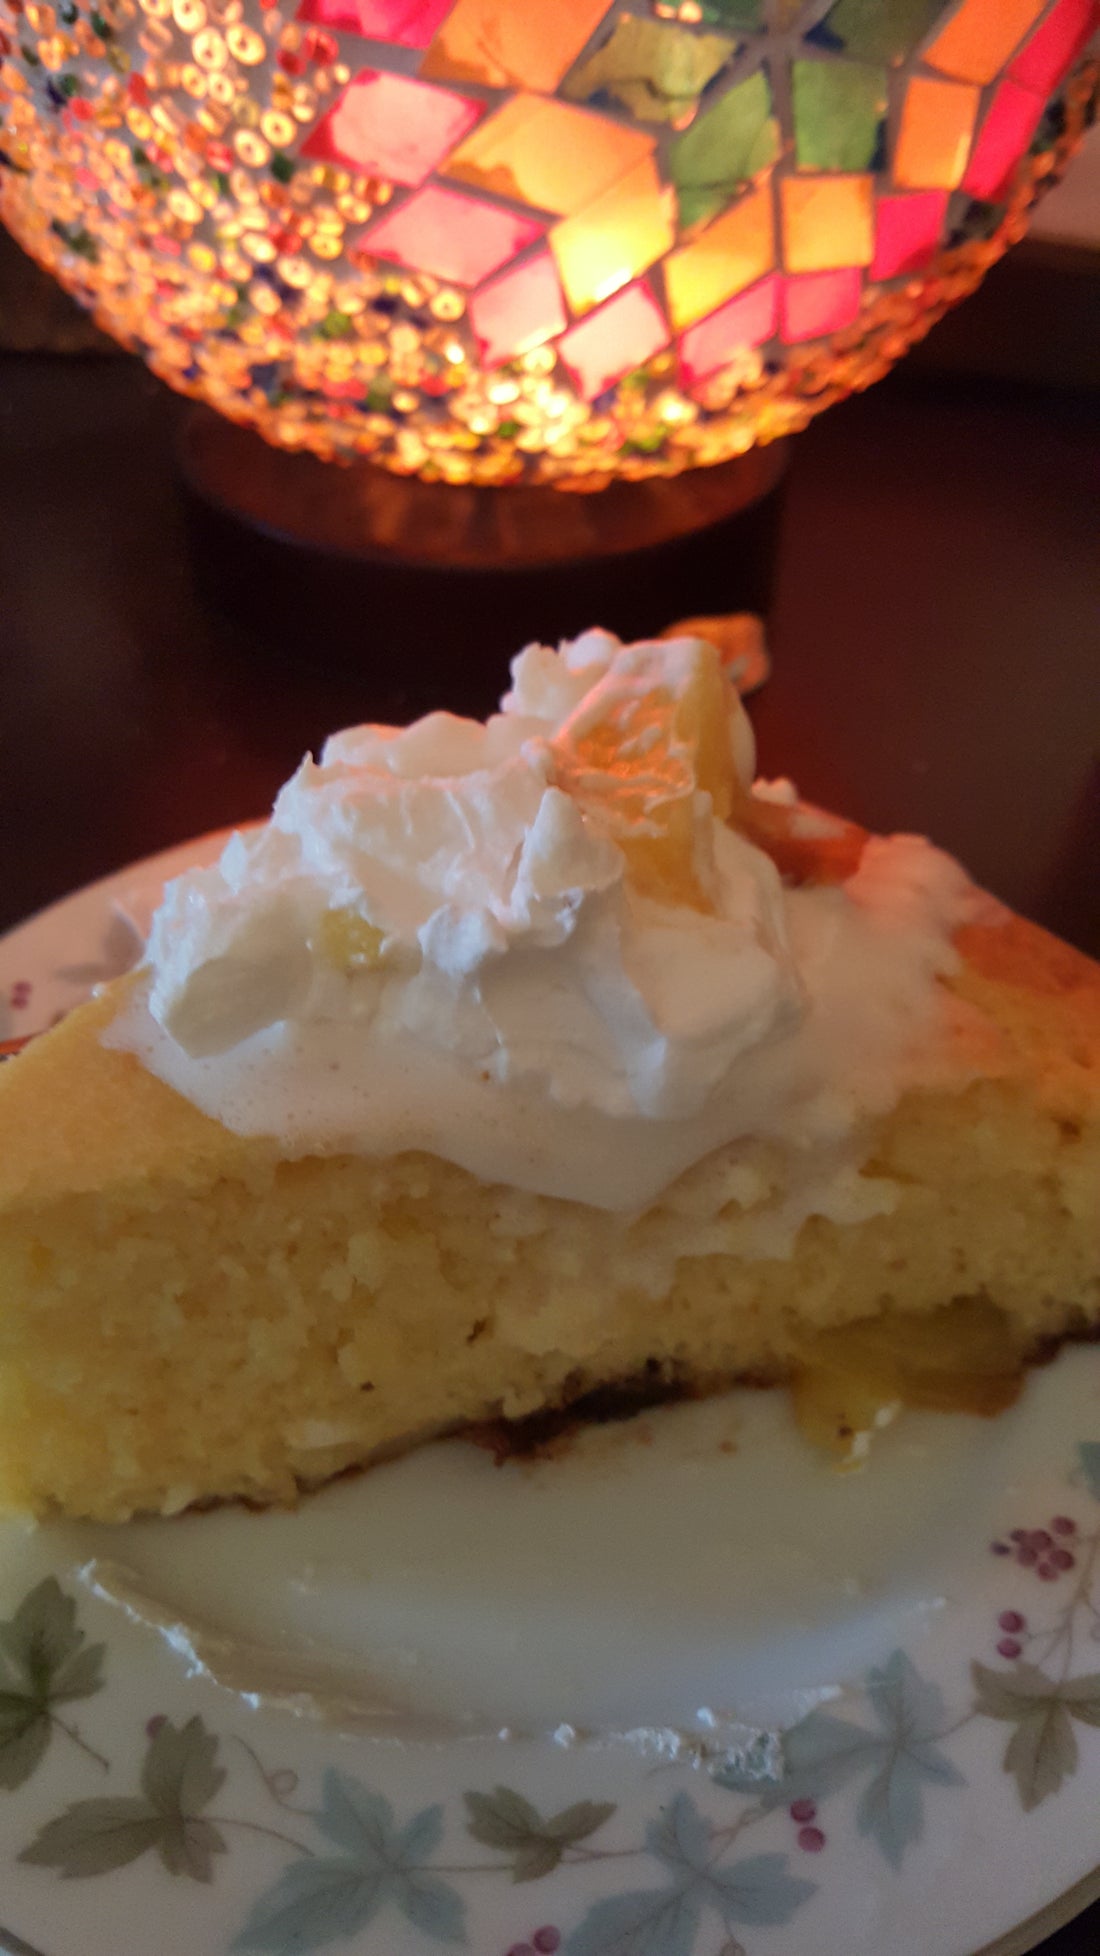 Pineapple Tonic, Peeper Health, and Perfect Cake